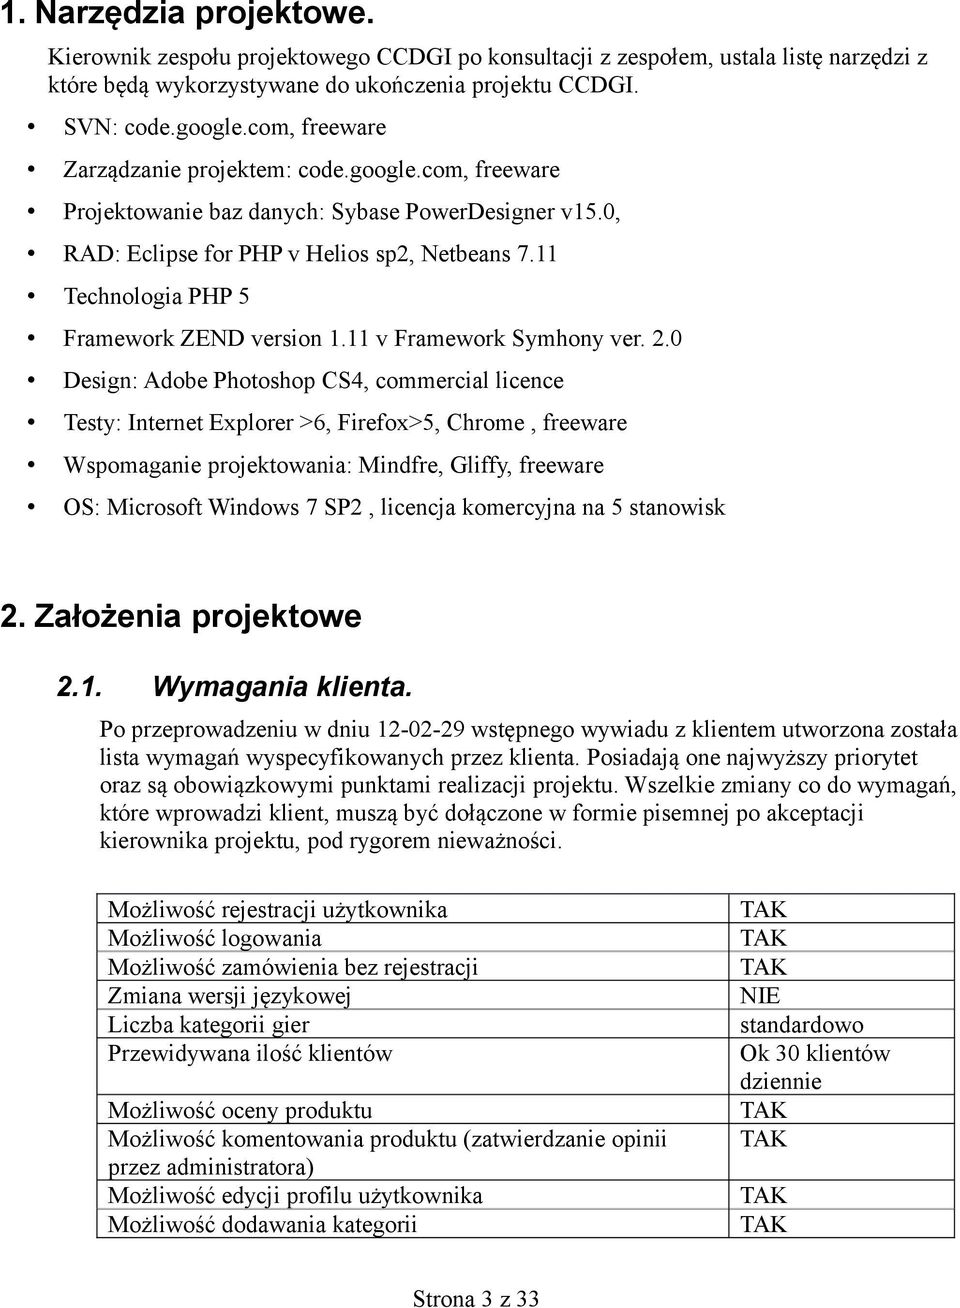 11 Technologia PHP 5 Framework ZEND version 1.11 v Framework Symhony ver. 2.